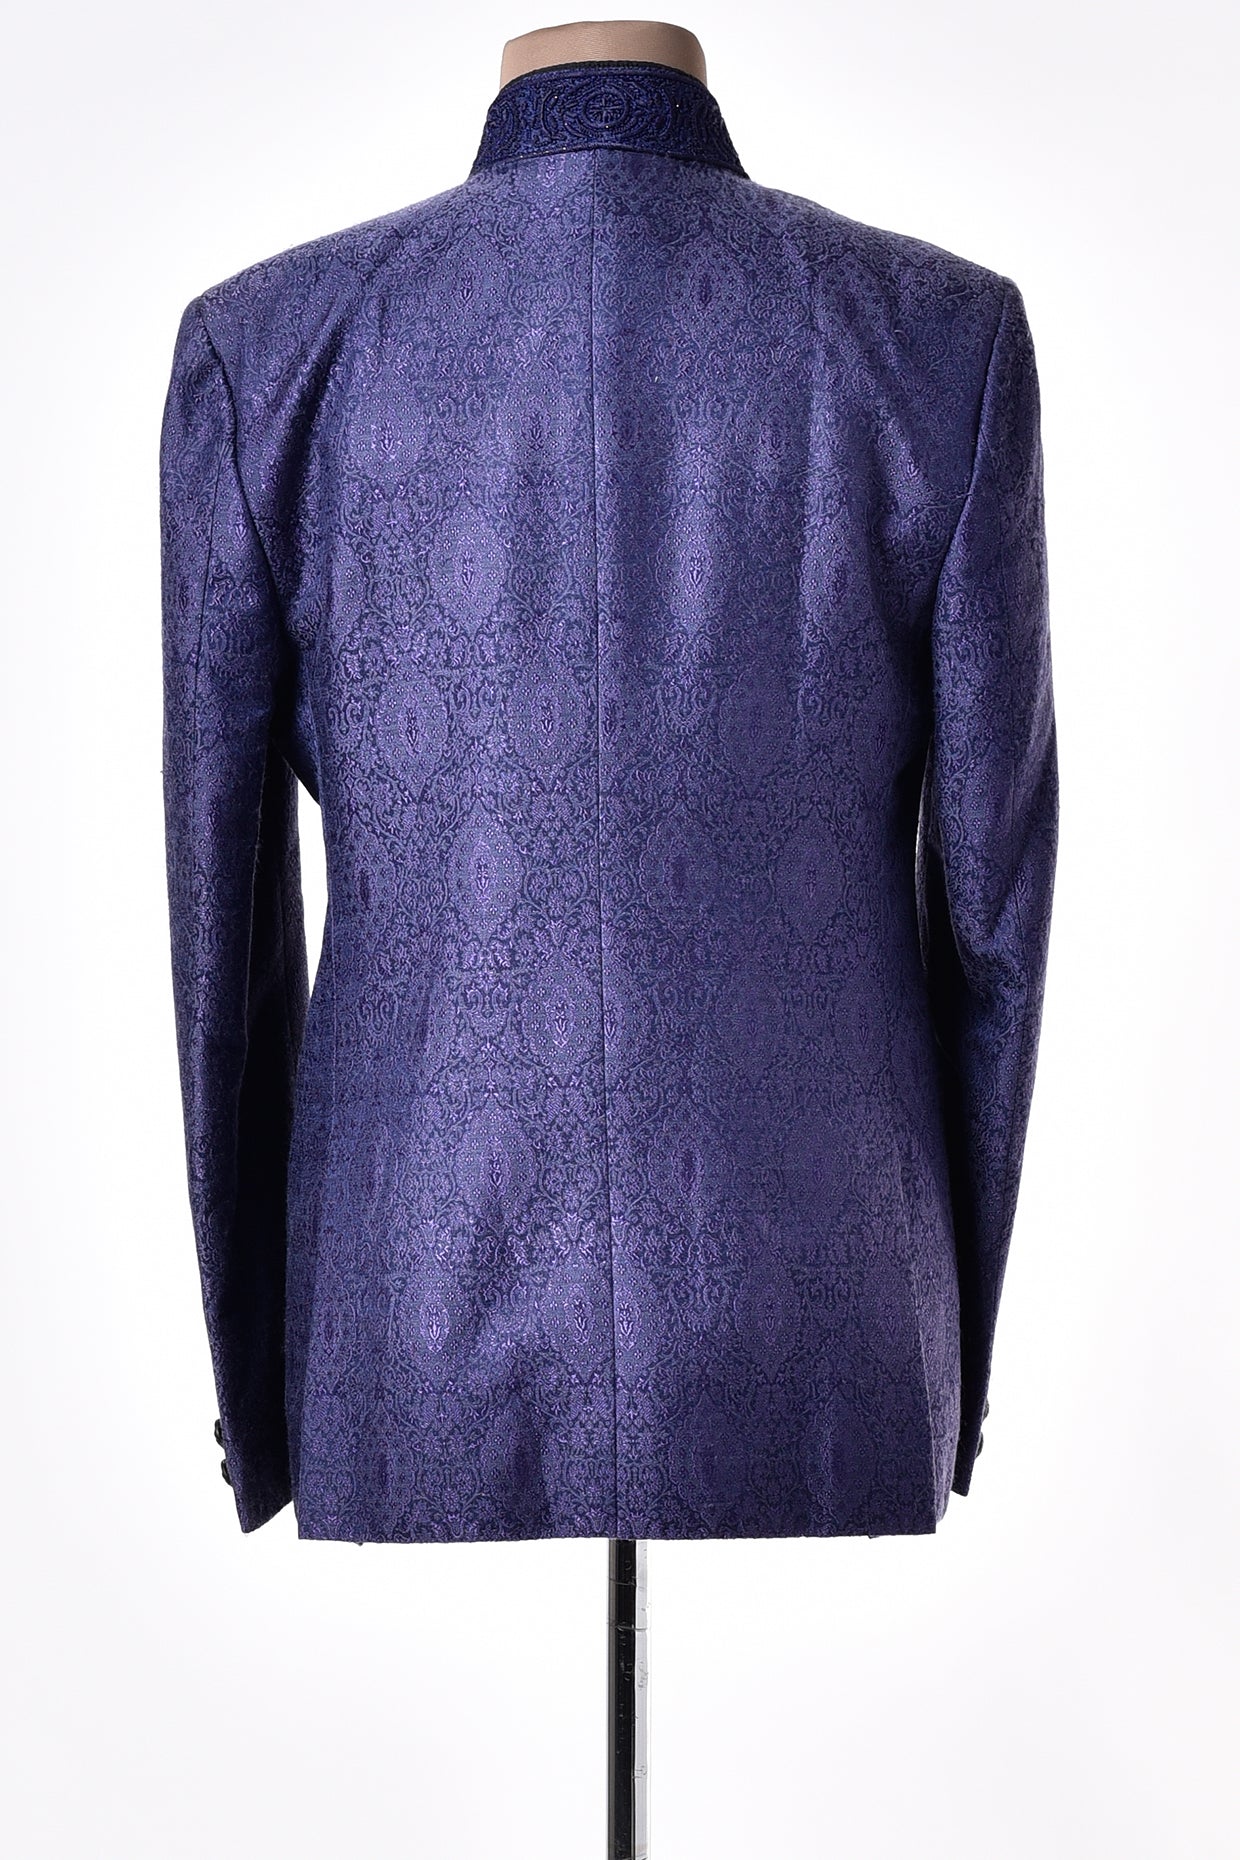 Cobalt Blue Embroidered Jodhpuri Bandhgala Jacket